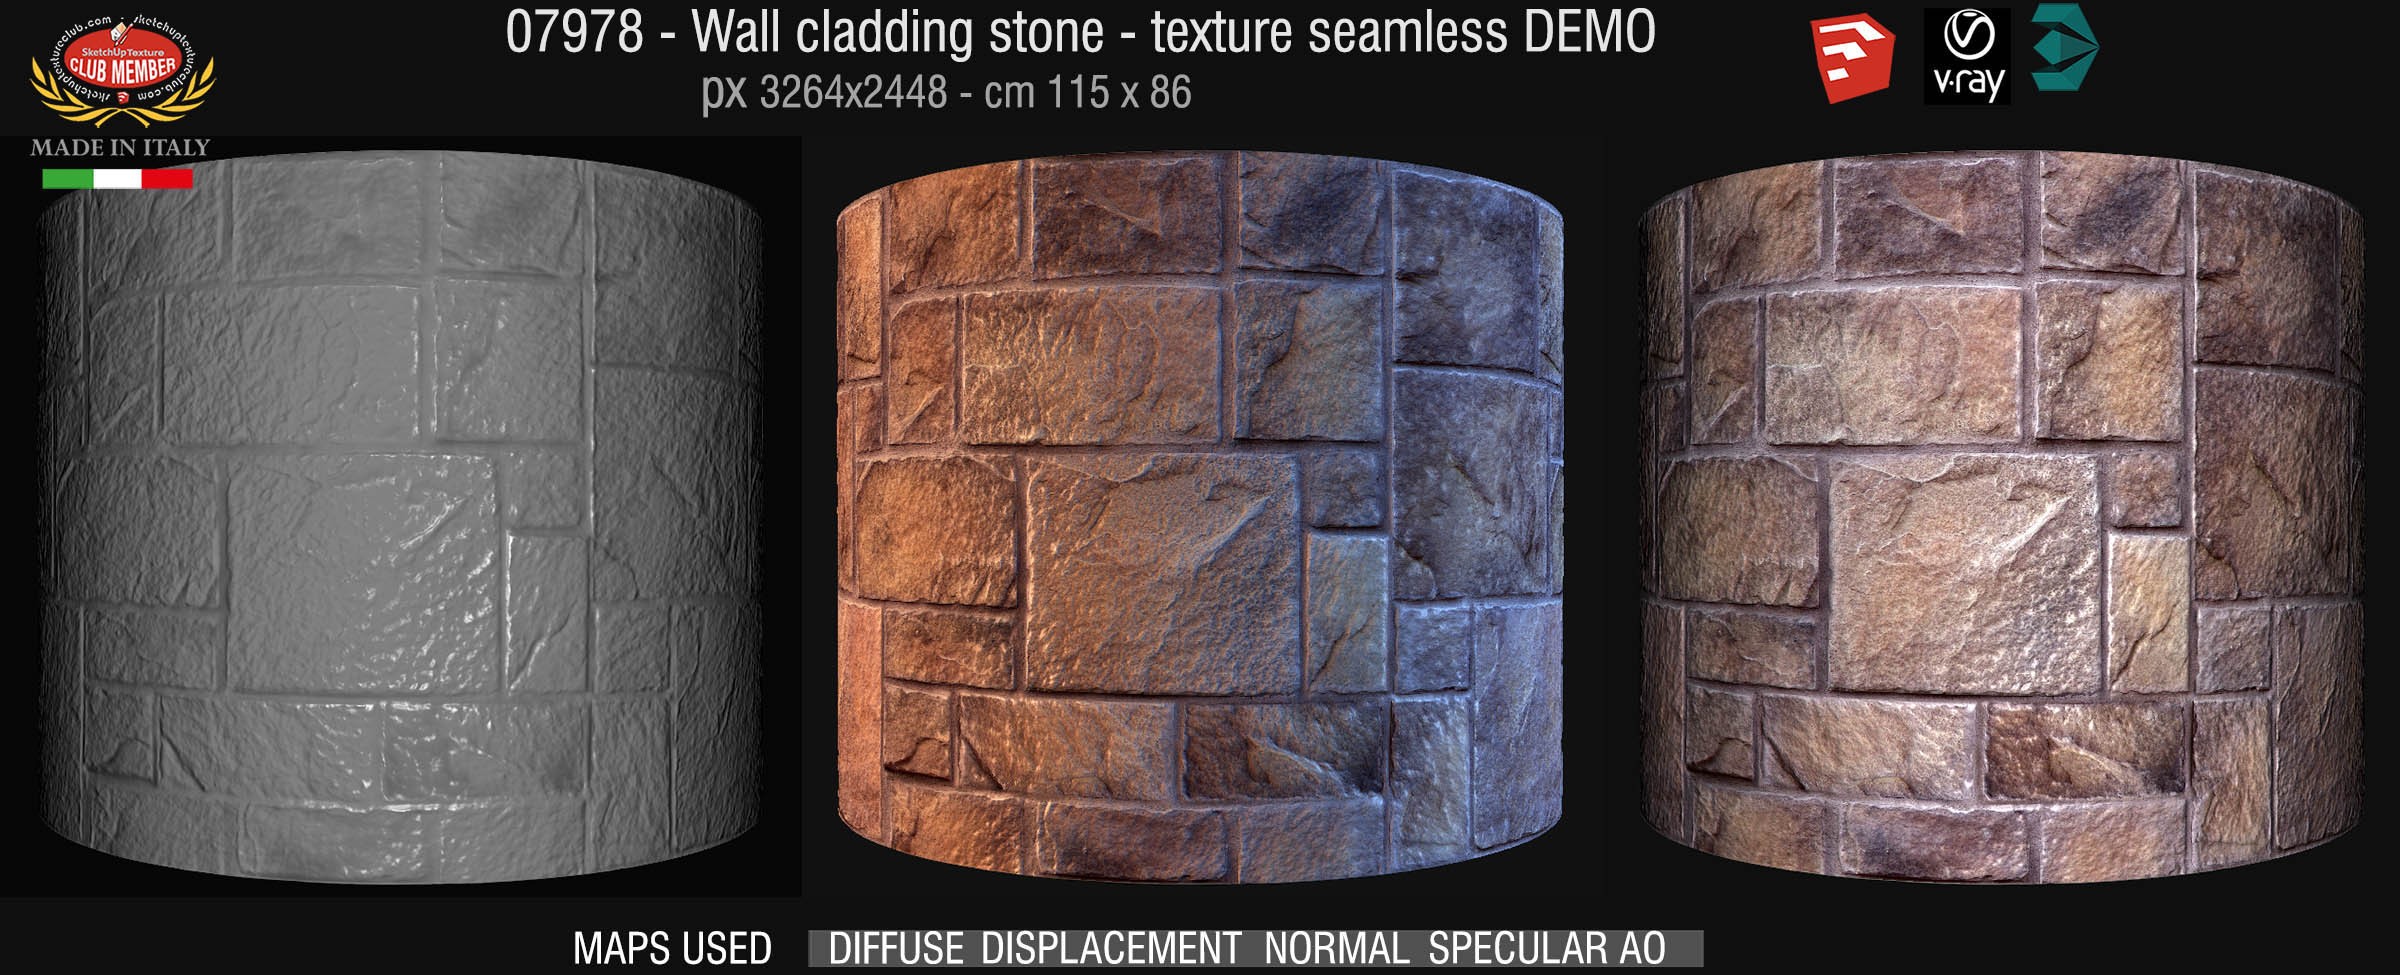 07978 Wall cladding stone texture seamless + maps DEMO